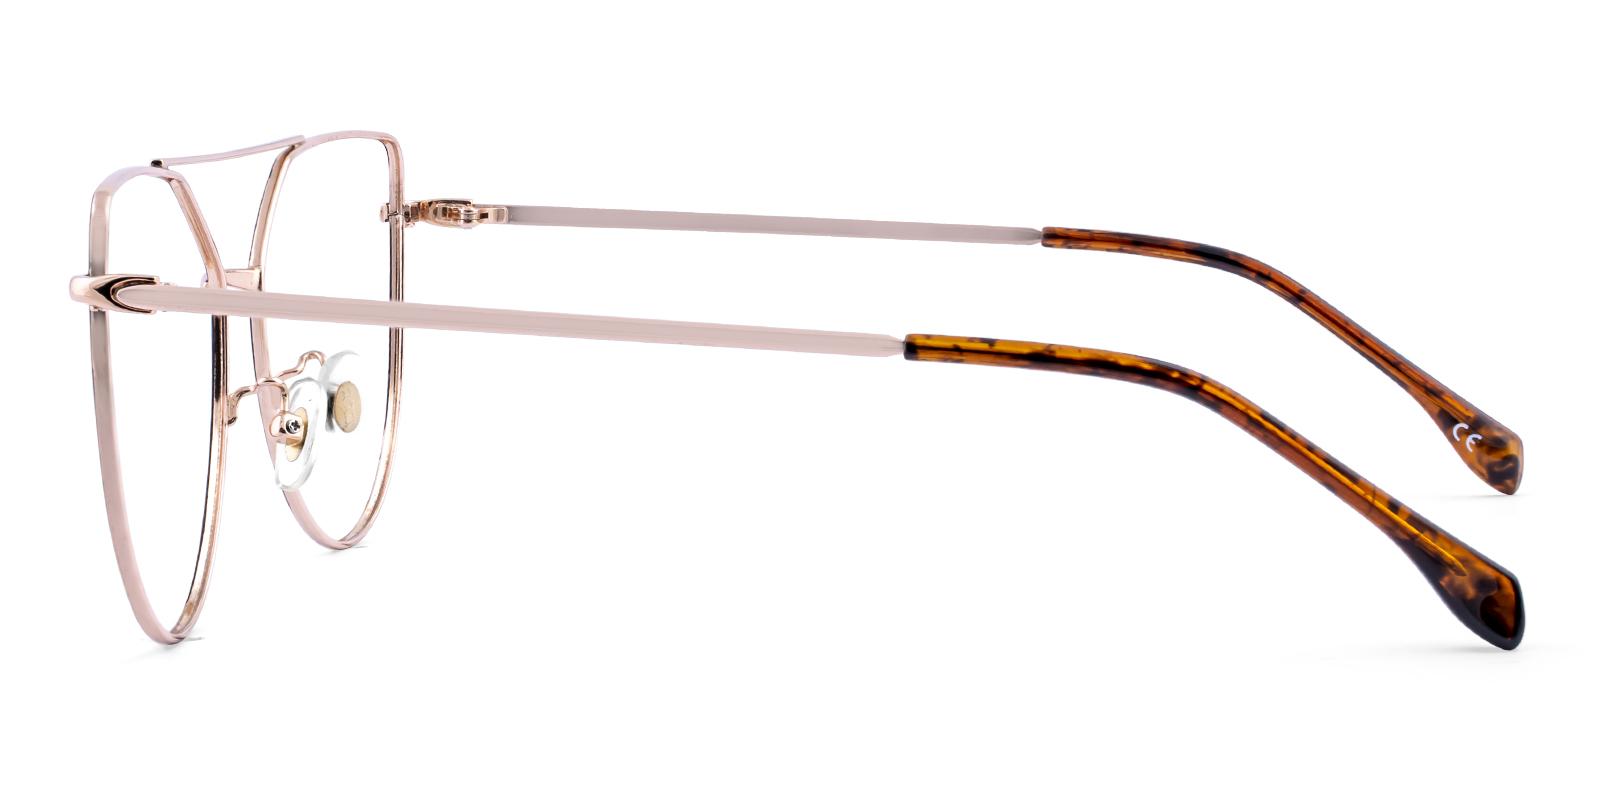 Opoit Gold Metal Eyeglasses , NosePads Frames from ABBE Glasses